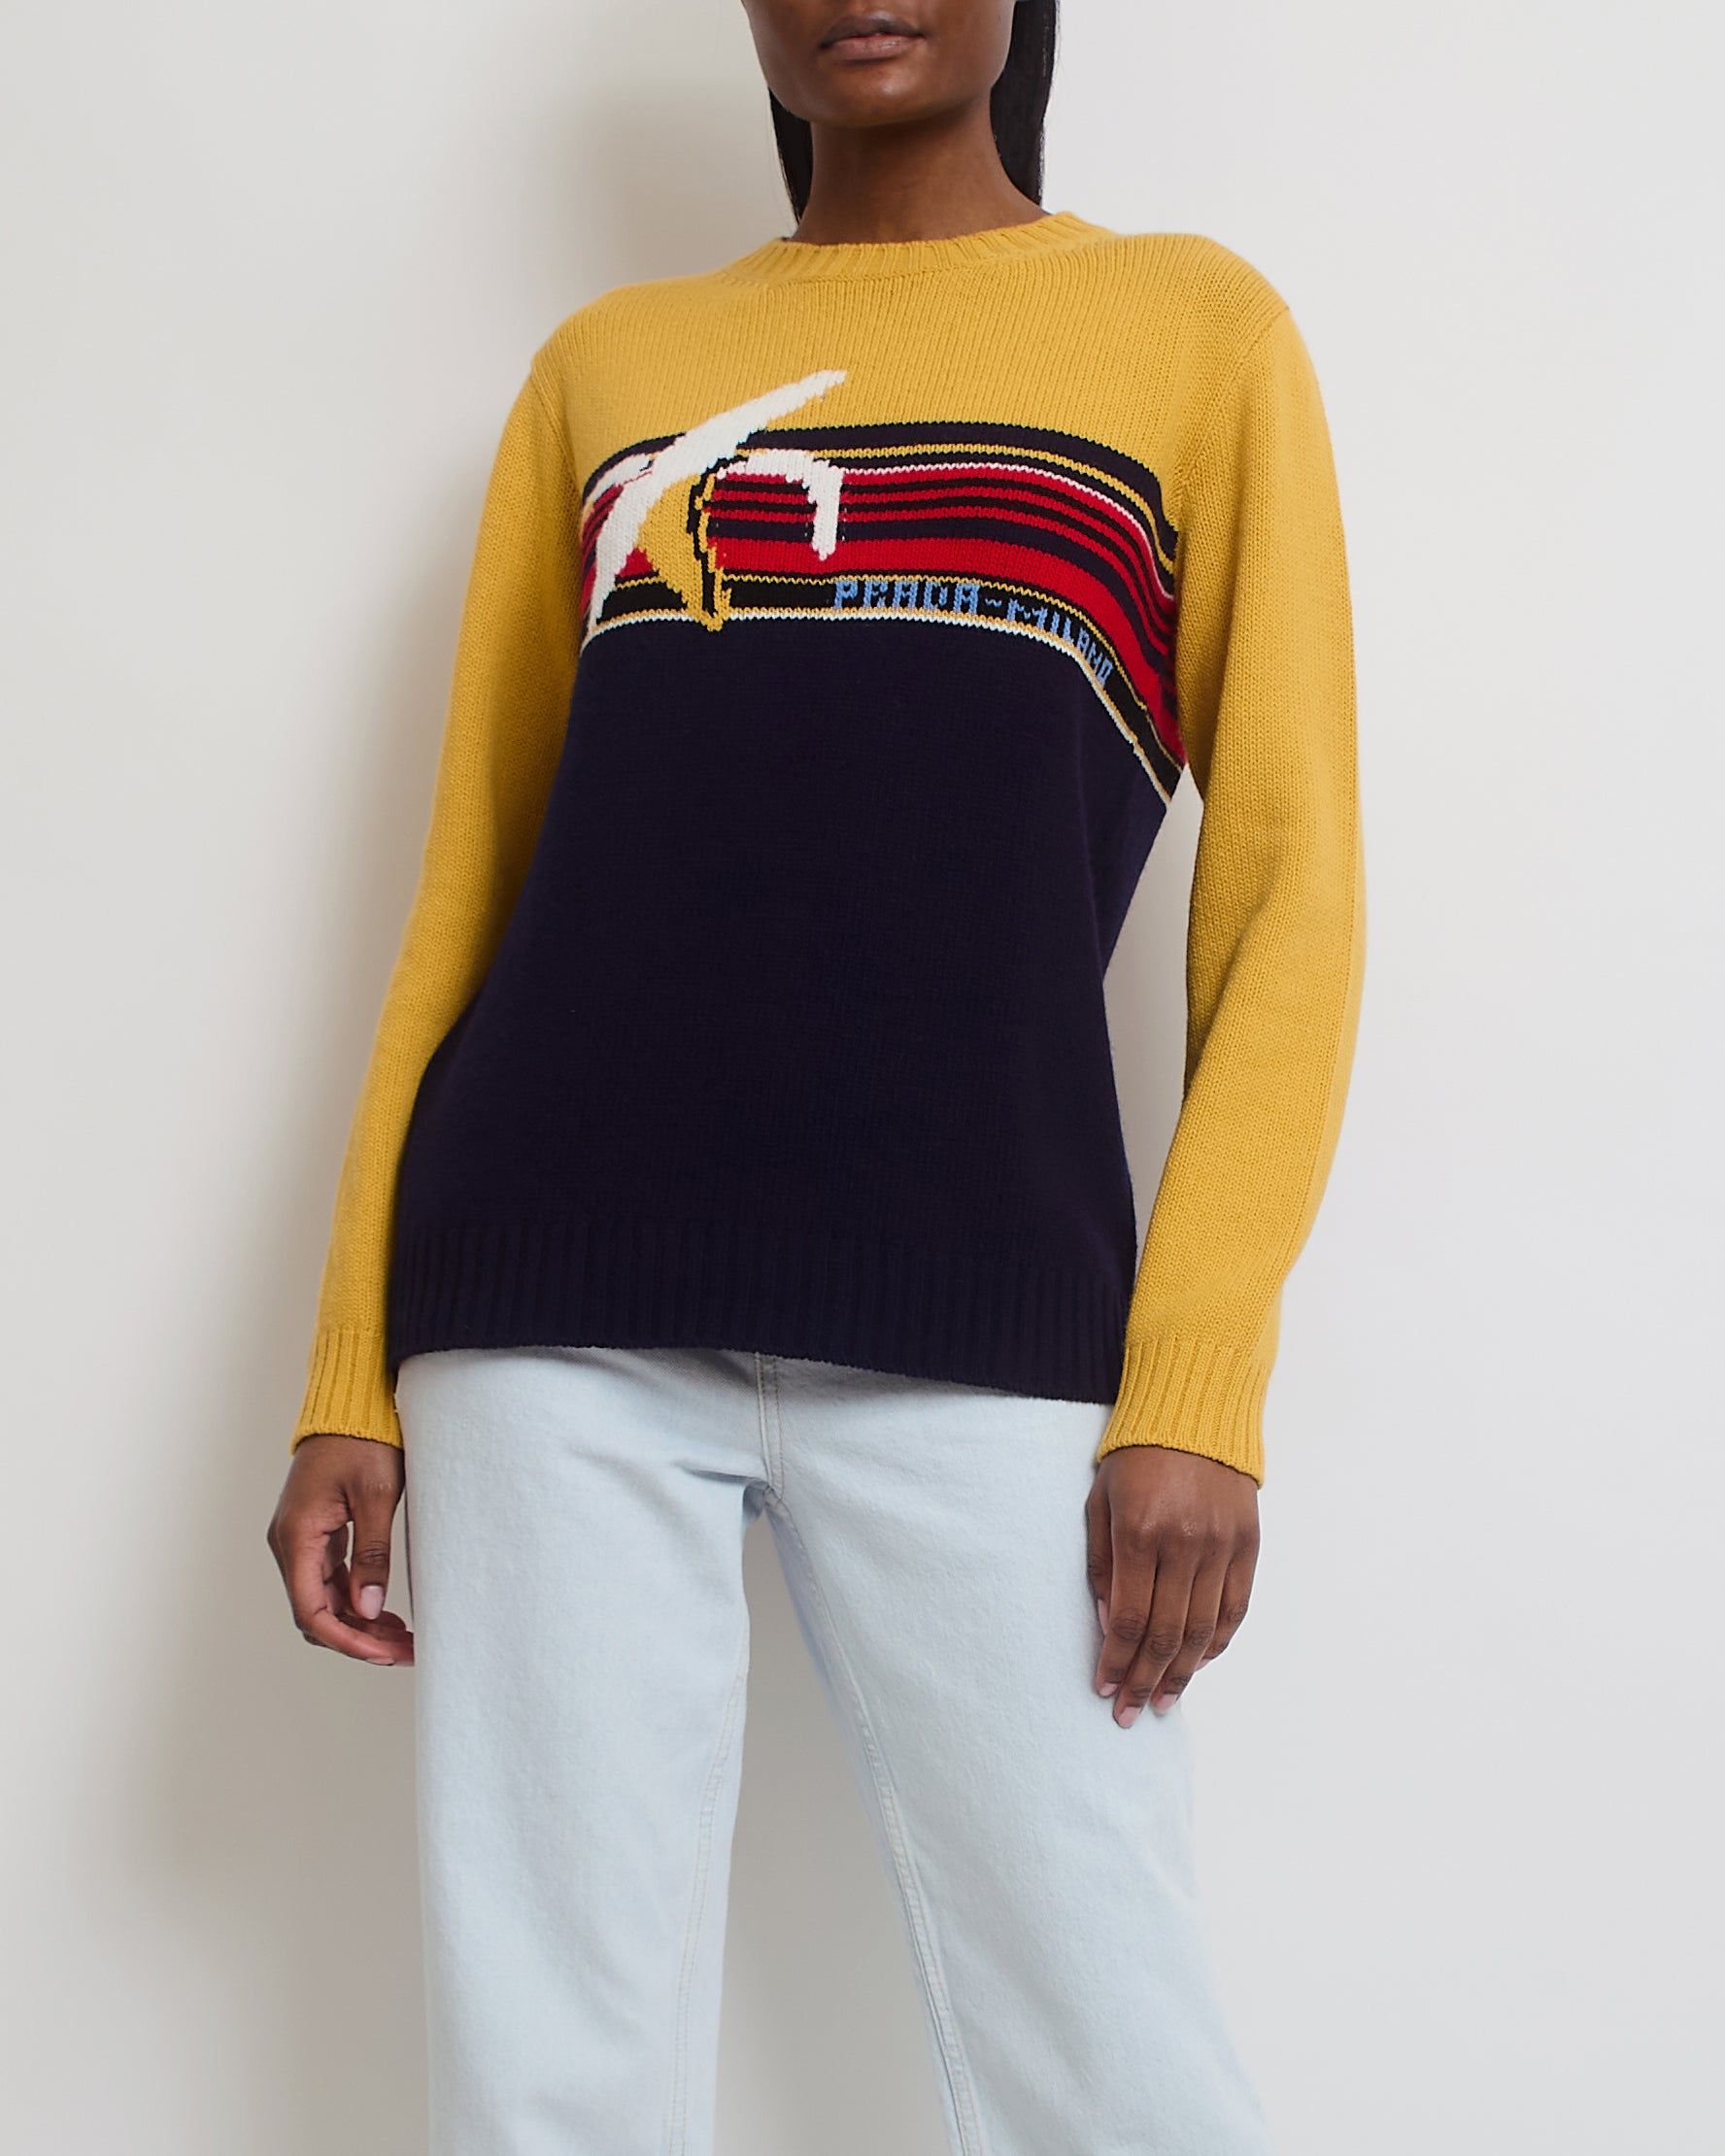 Prada long-sleeve knitted jumper - Yellow